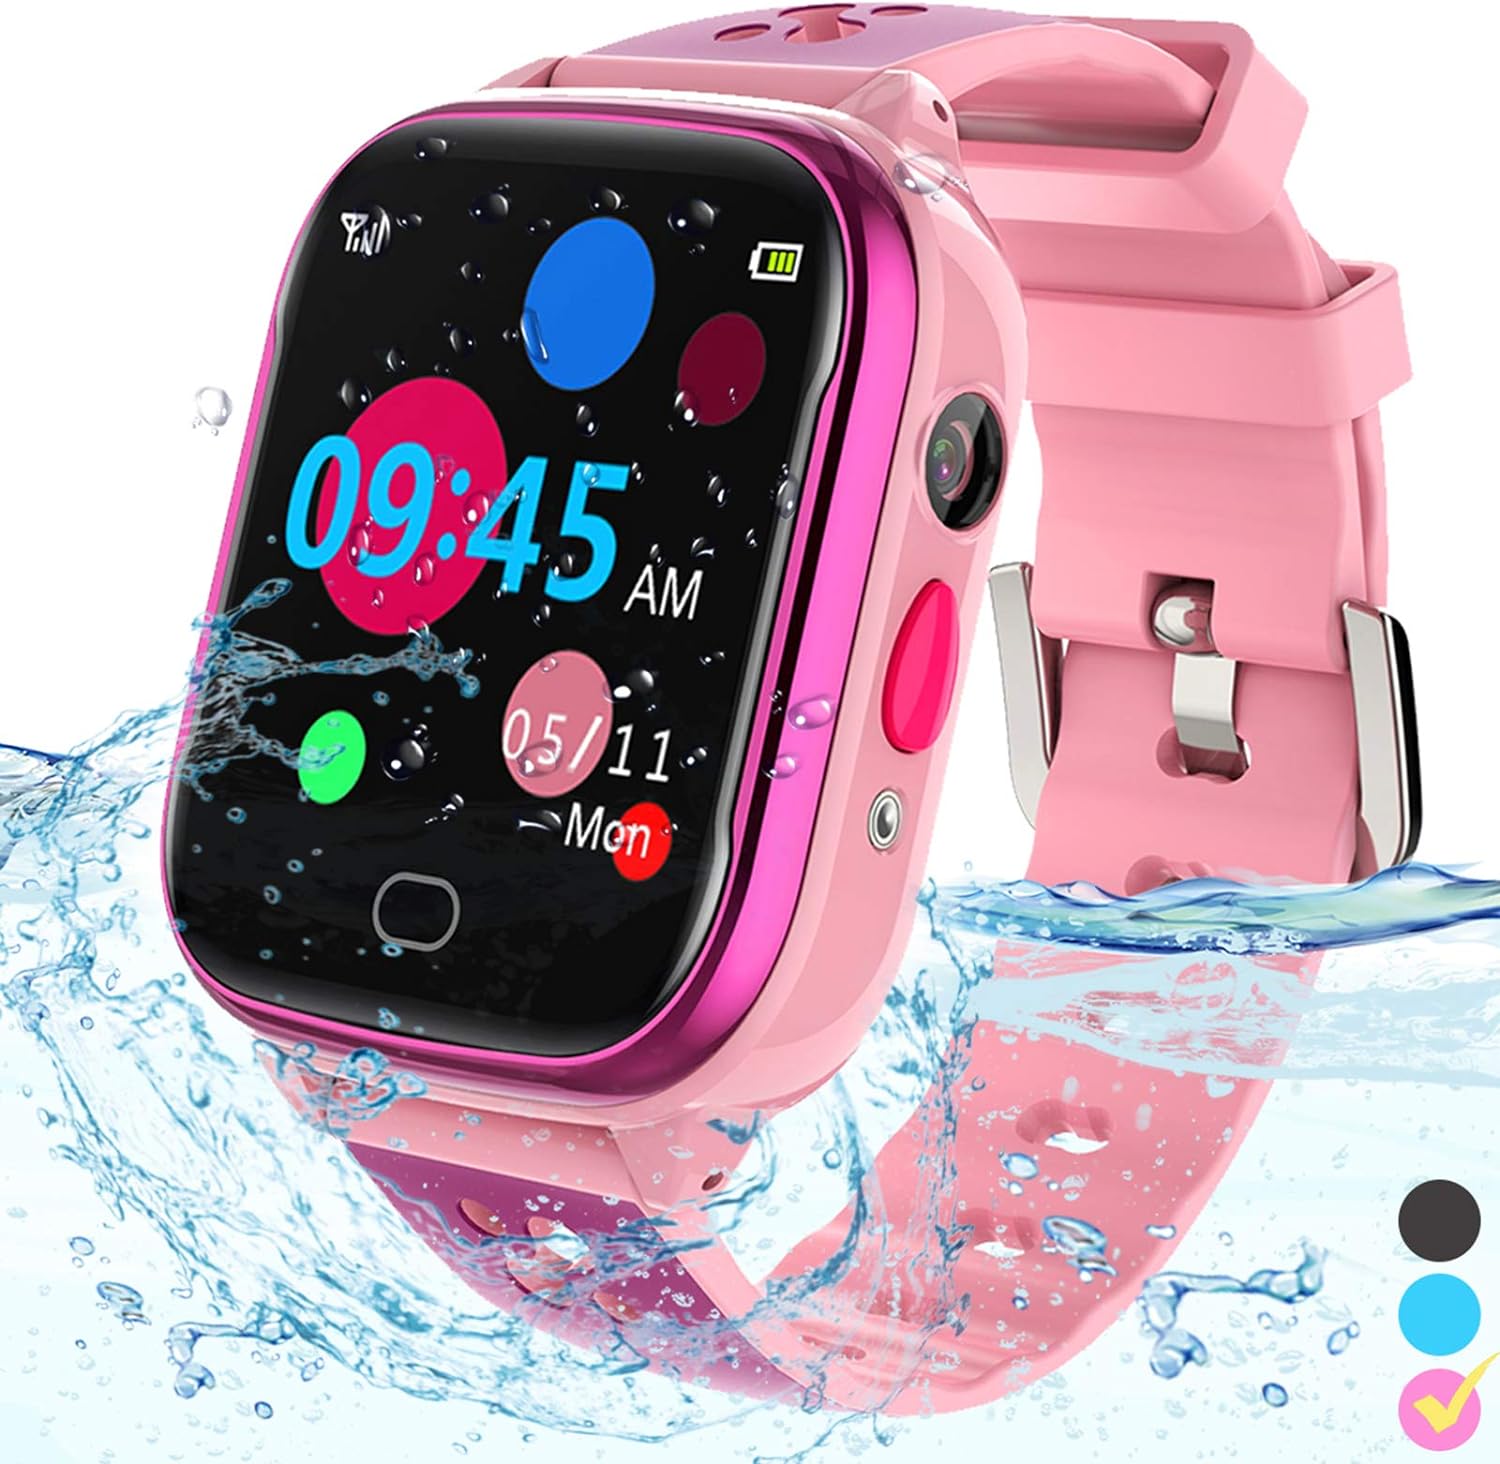 LULUDDM Kids Smart Watch Phone Review